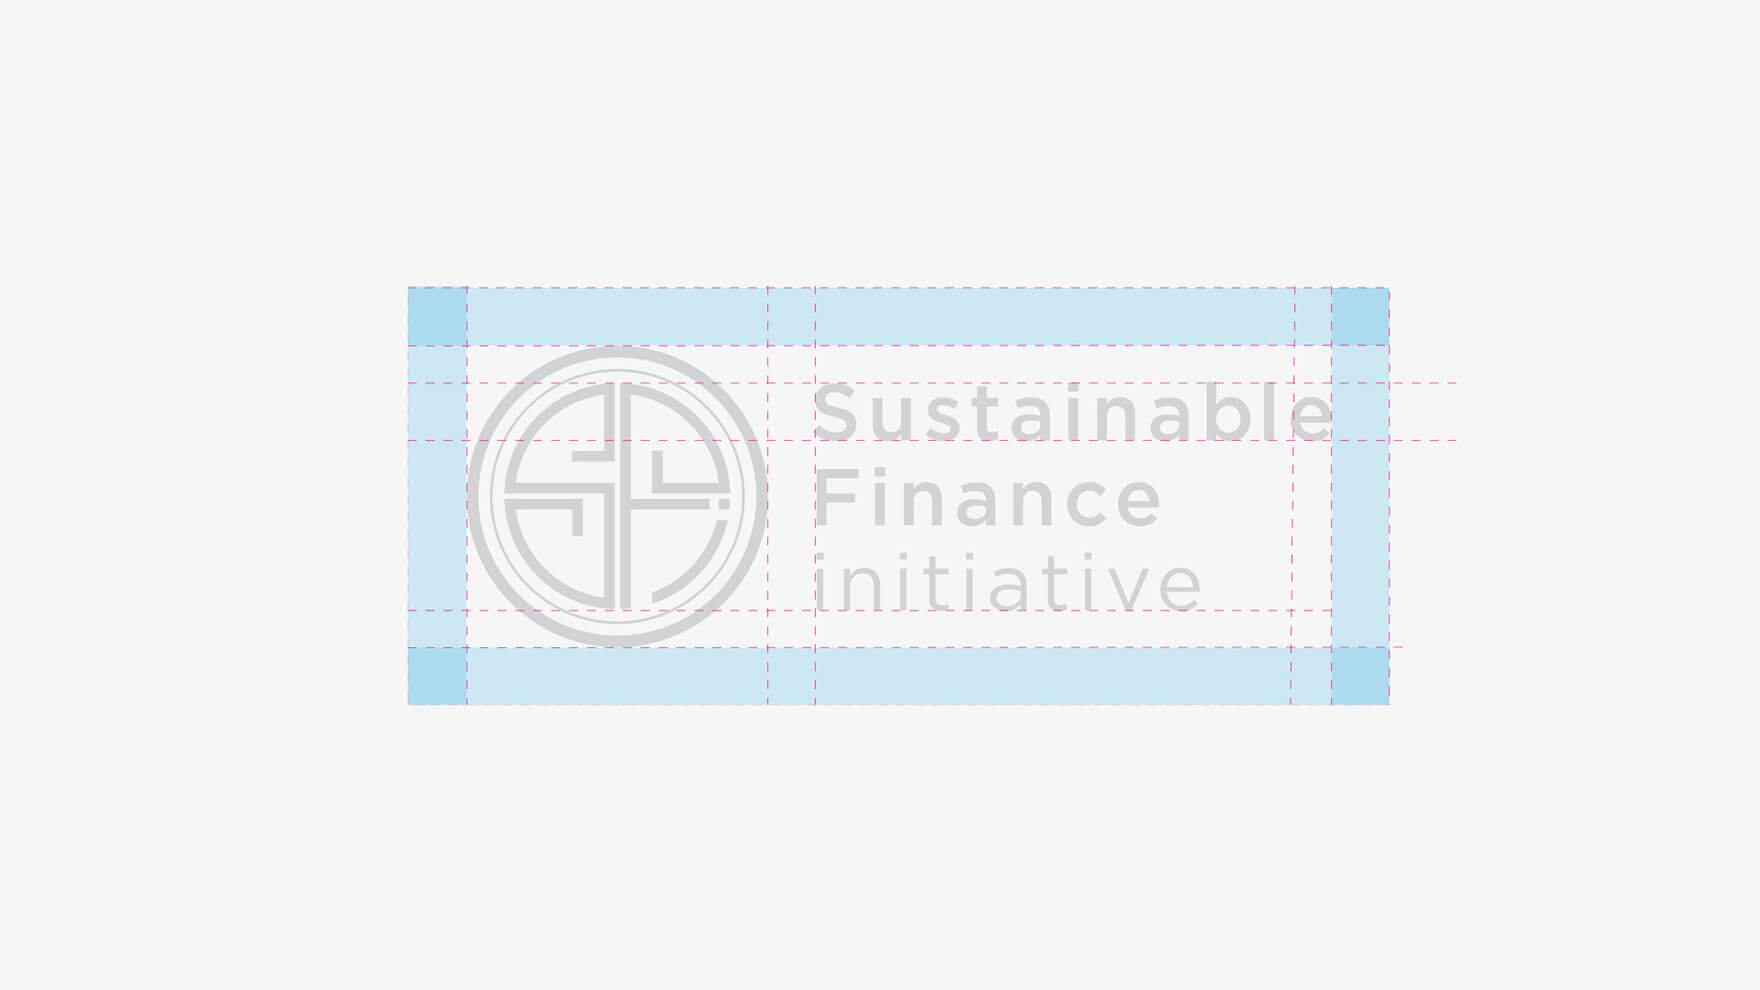 Branding Agency Hong Kong_SustainableFinanceInitiative_Corporate Identity Design_CheddarMedia_3_1760